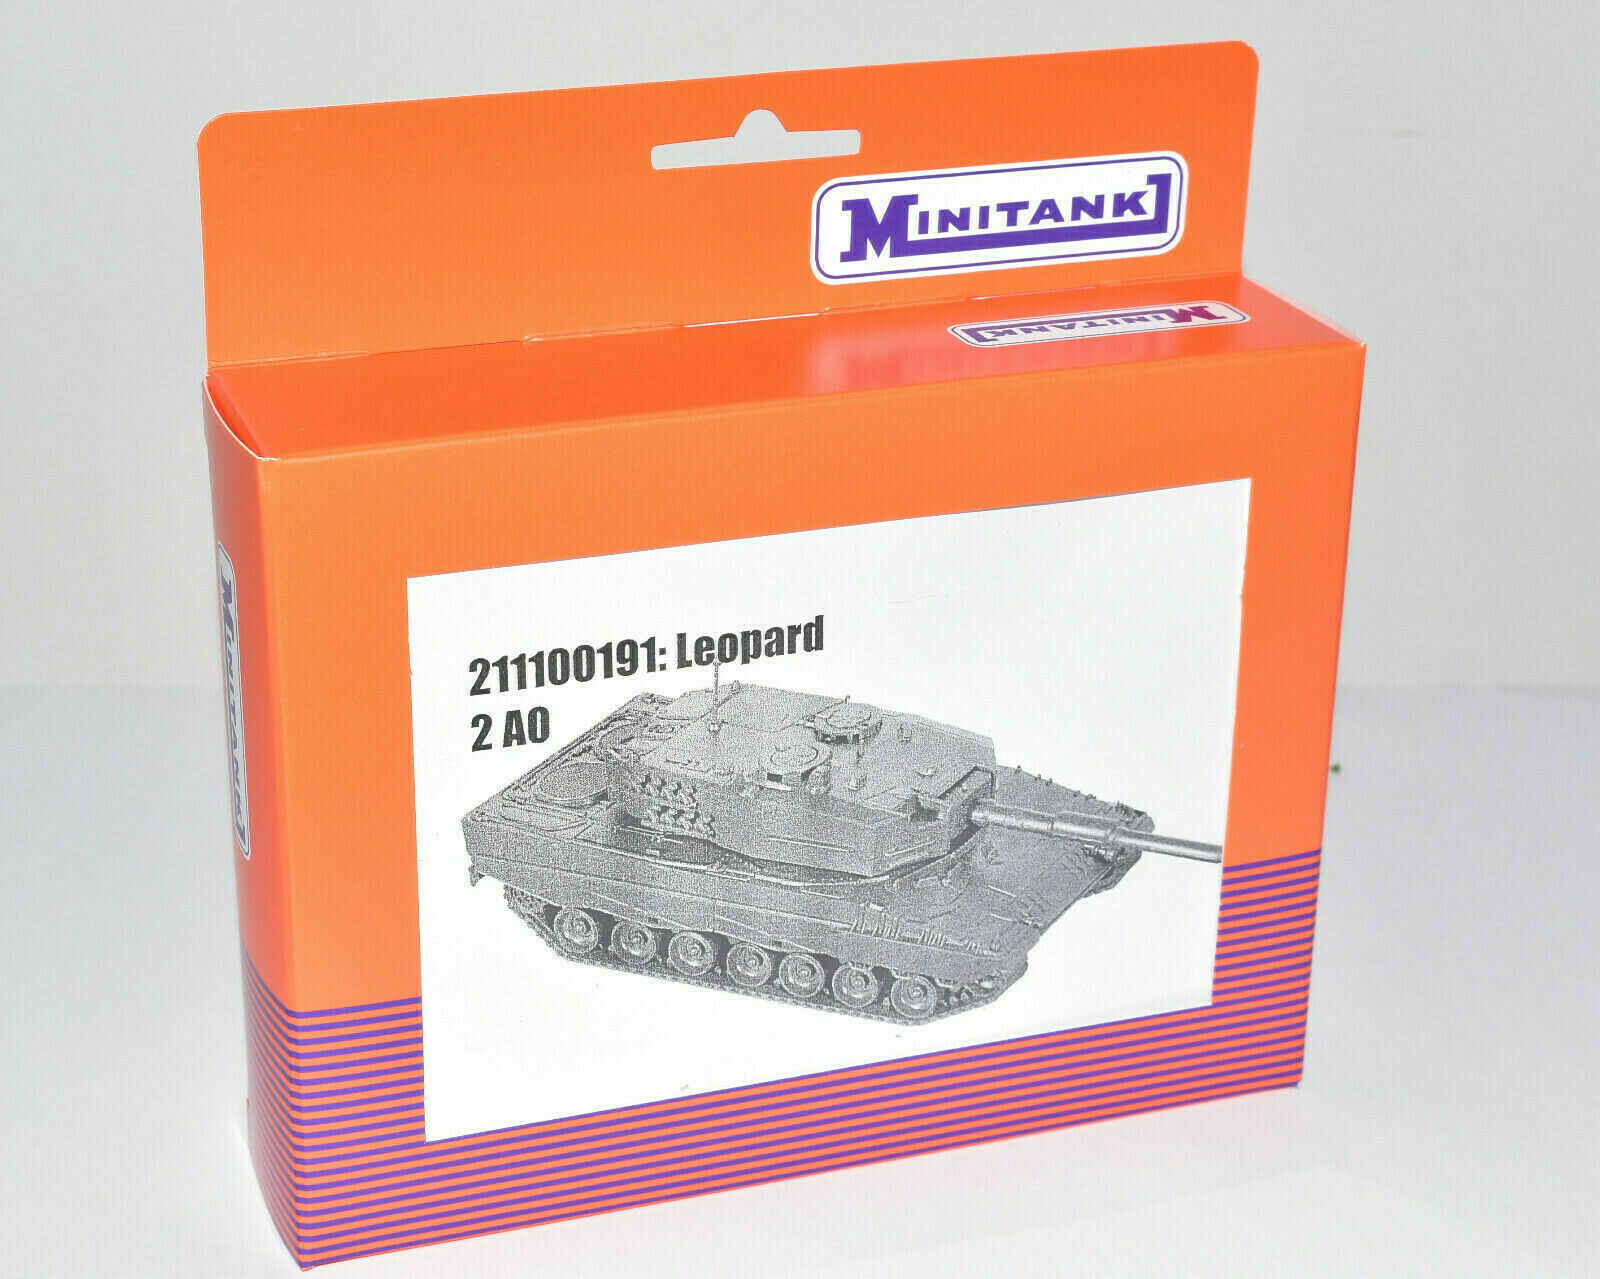 Artikel Bild: MINITANK 211100191 Leopard 2A0 Panzer, Bausatz, oliv Bw NEU & OVP 1:87